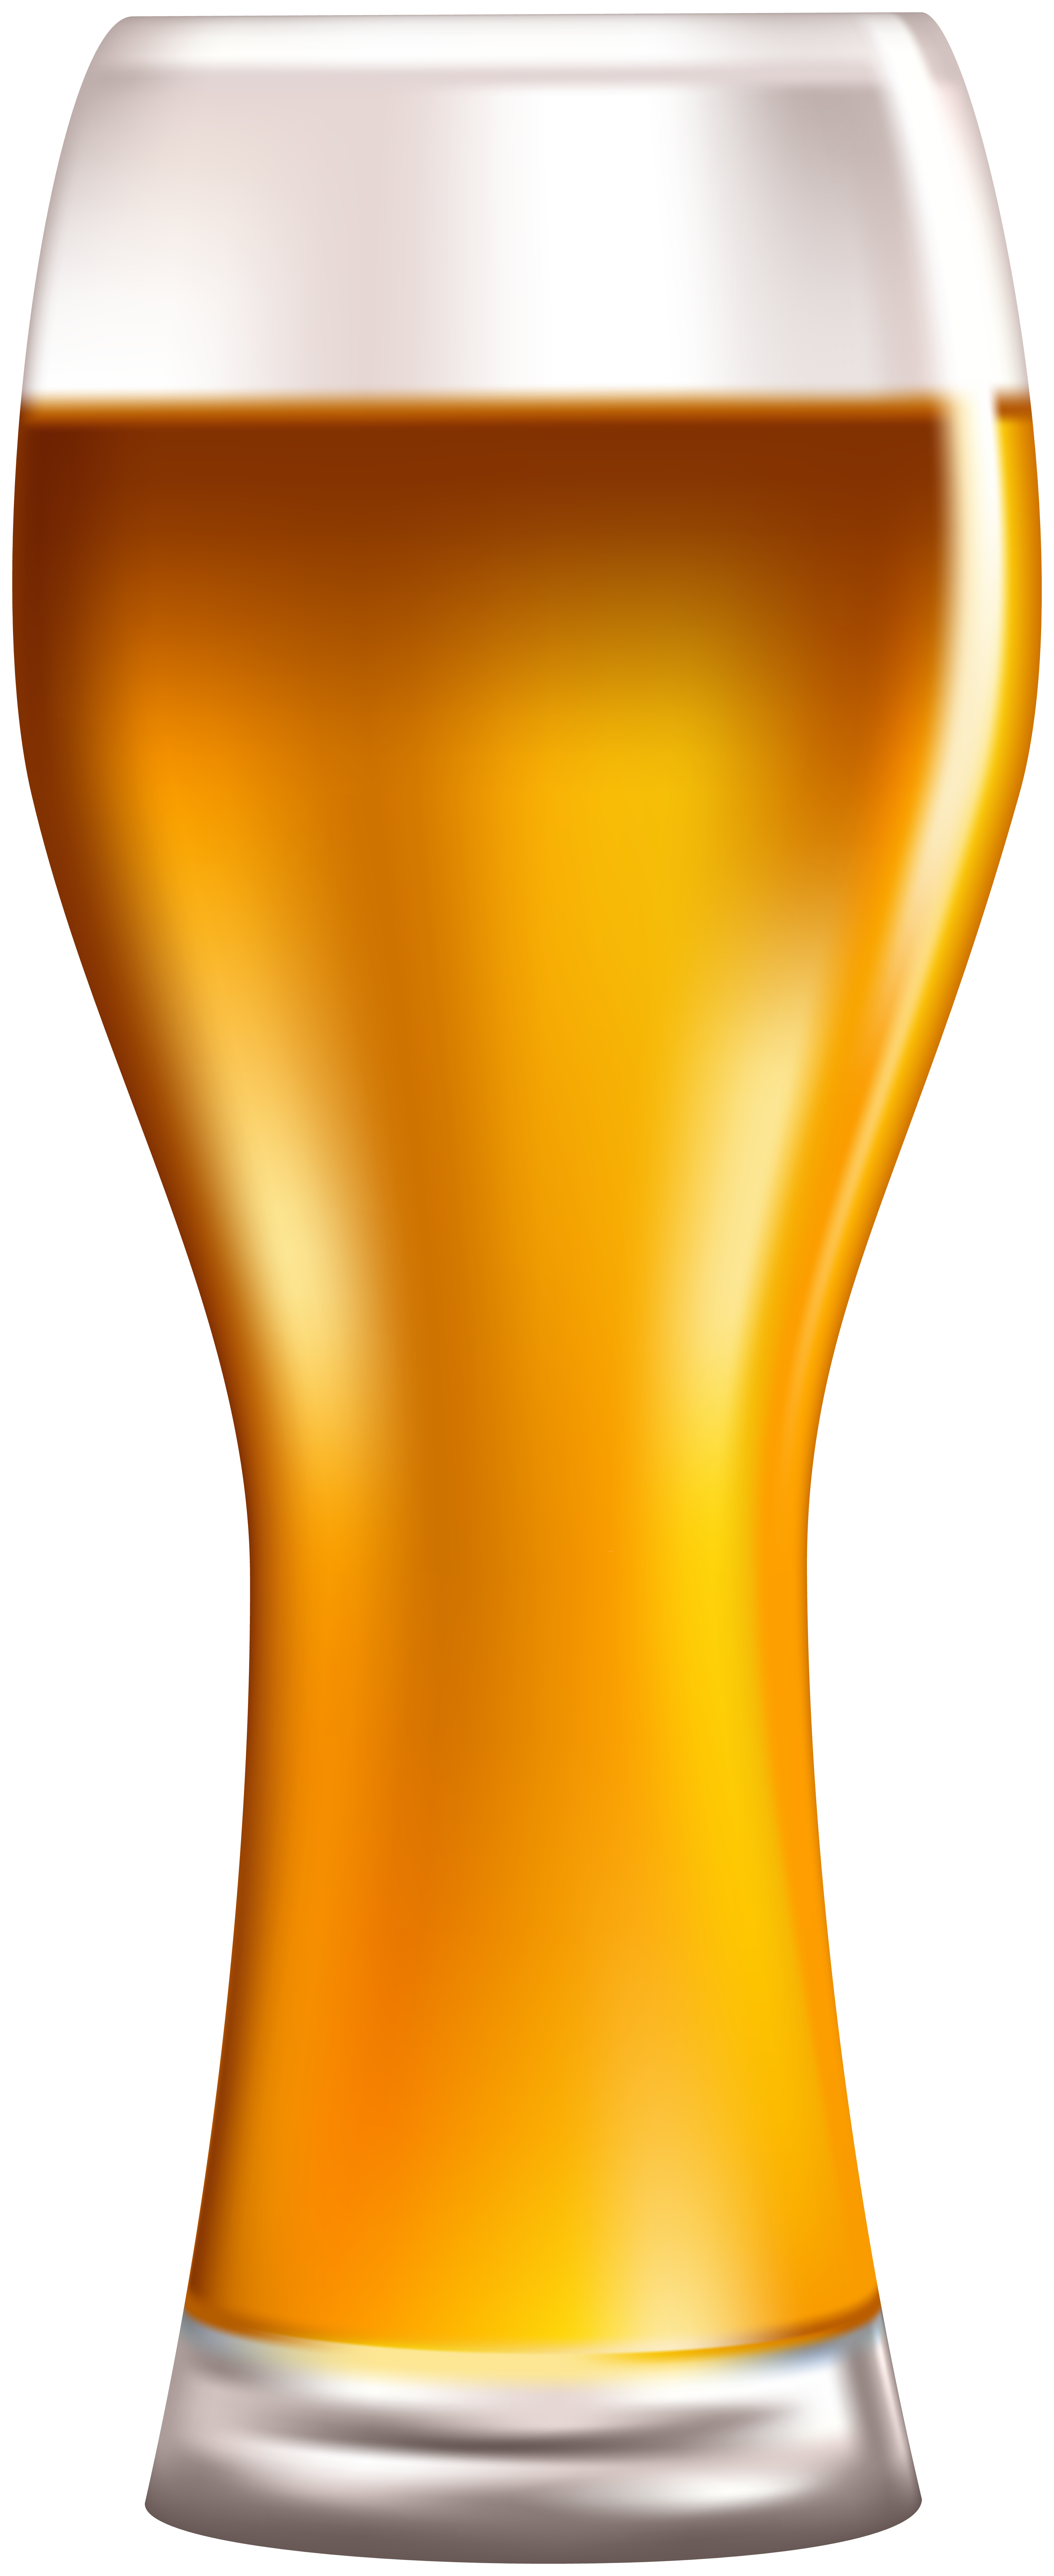 Glass Beer PNG Clip Art Image.